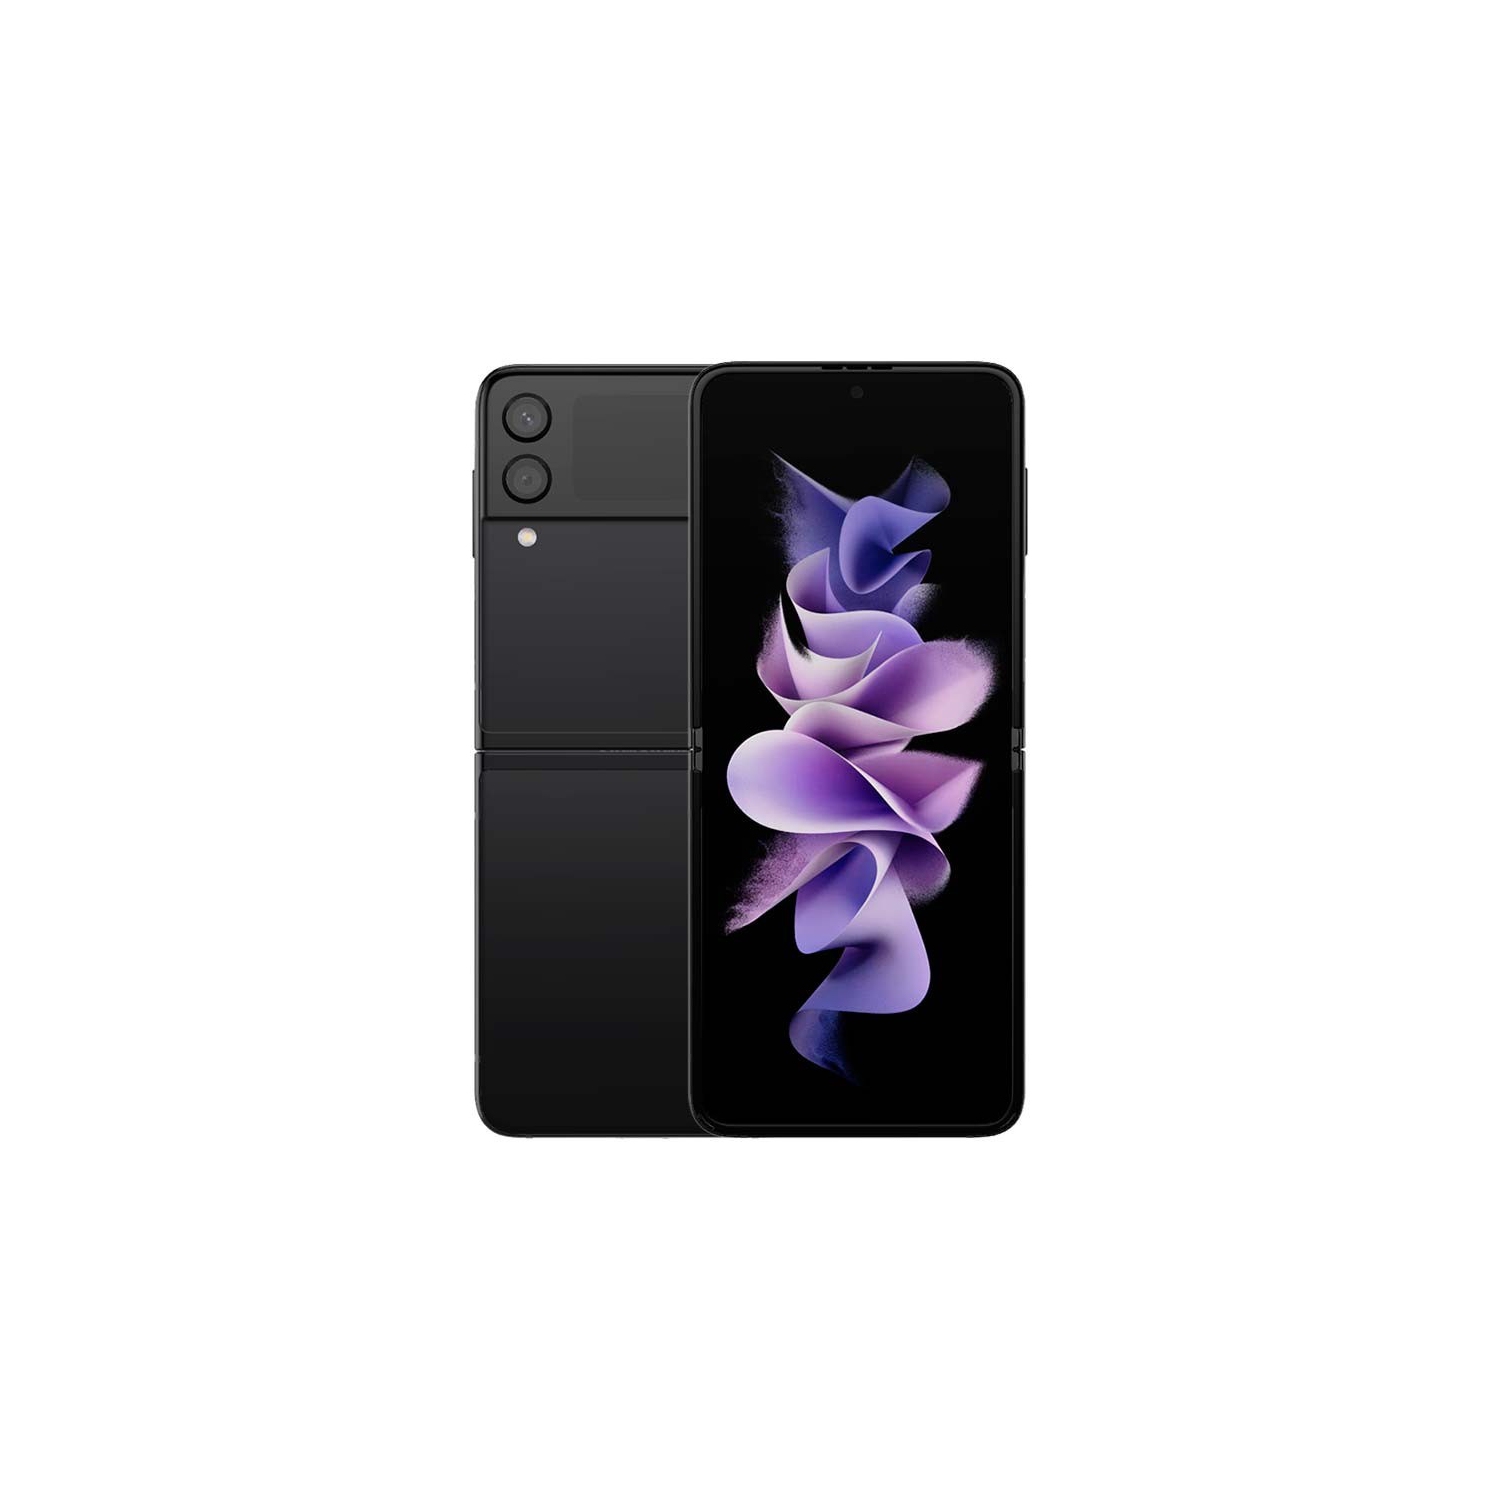 Samsung Galaxy Z Flip 3 5G F7110 (128GB/8GB, Phantom Black) - Brand New